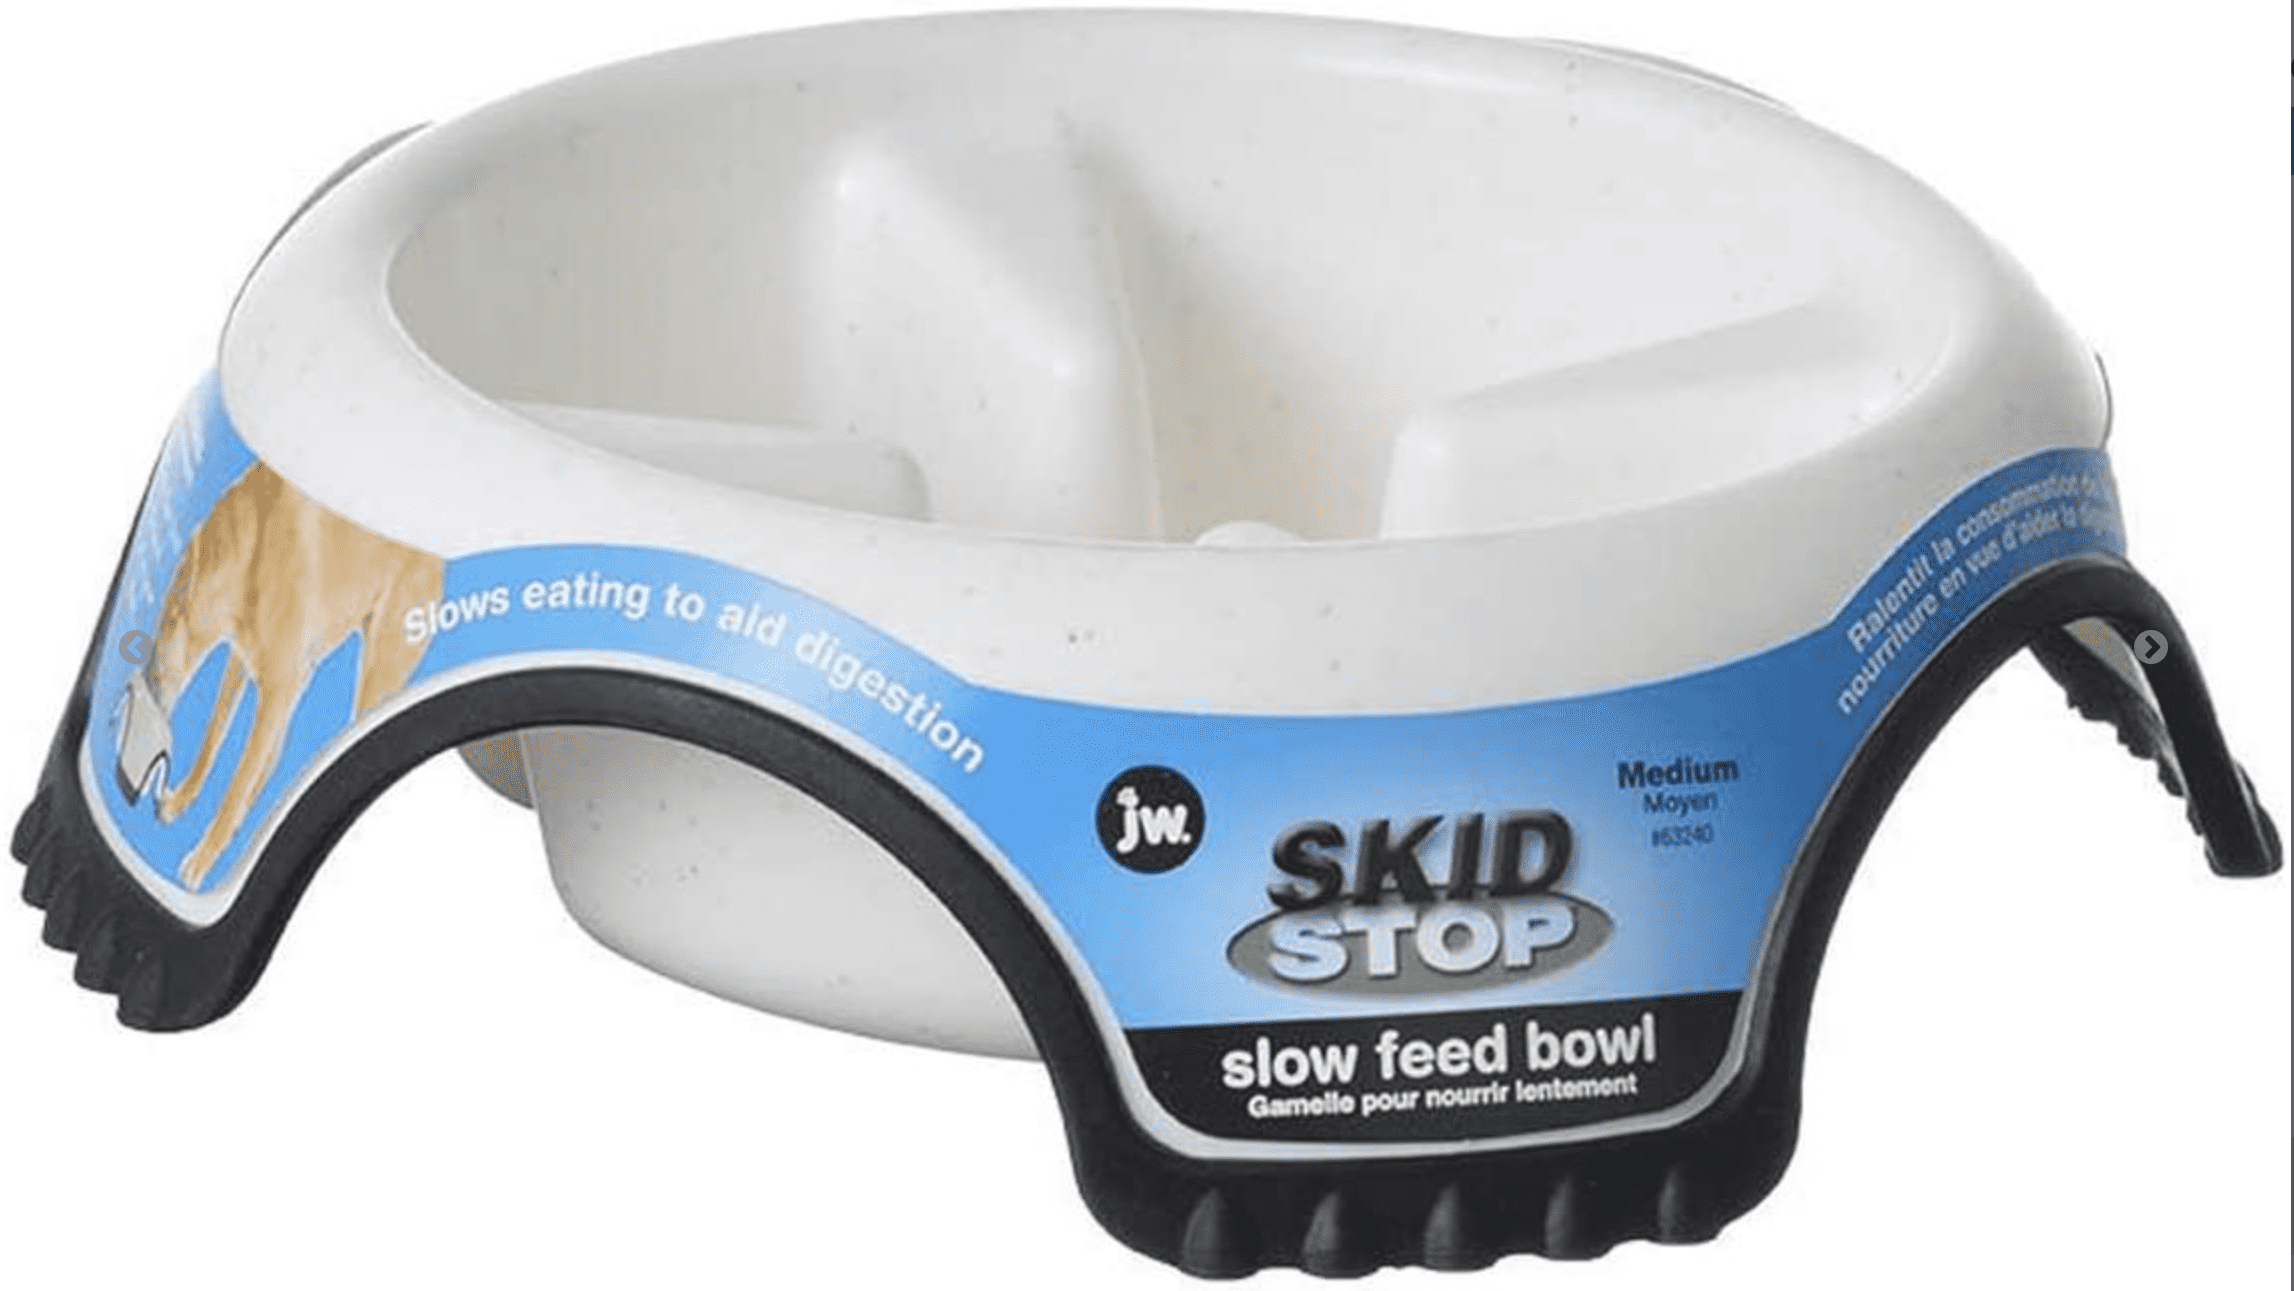 JW Jumbo Slow Feed Skid Stop Bowl